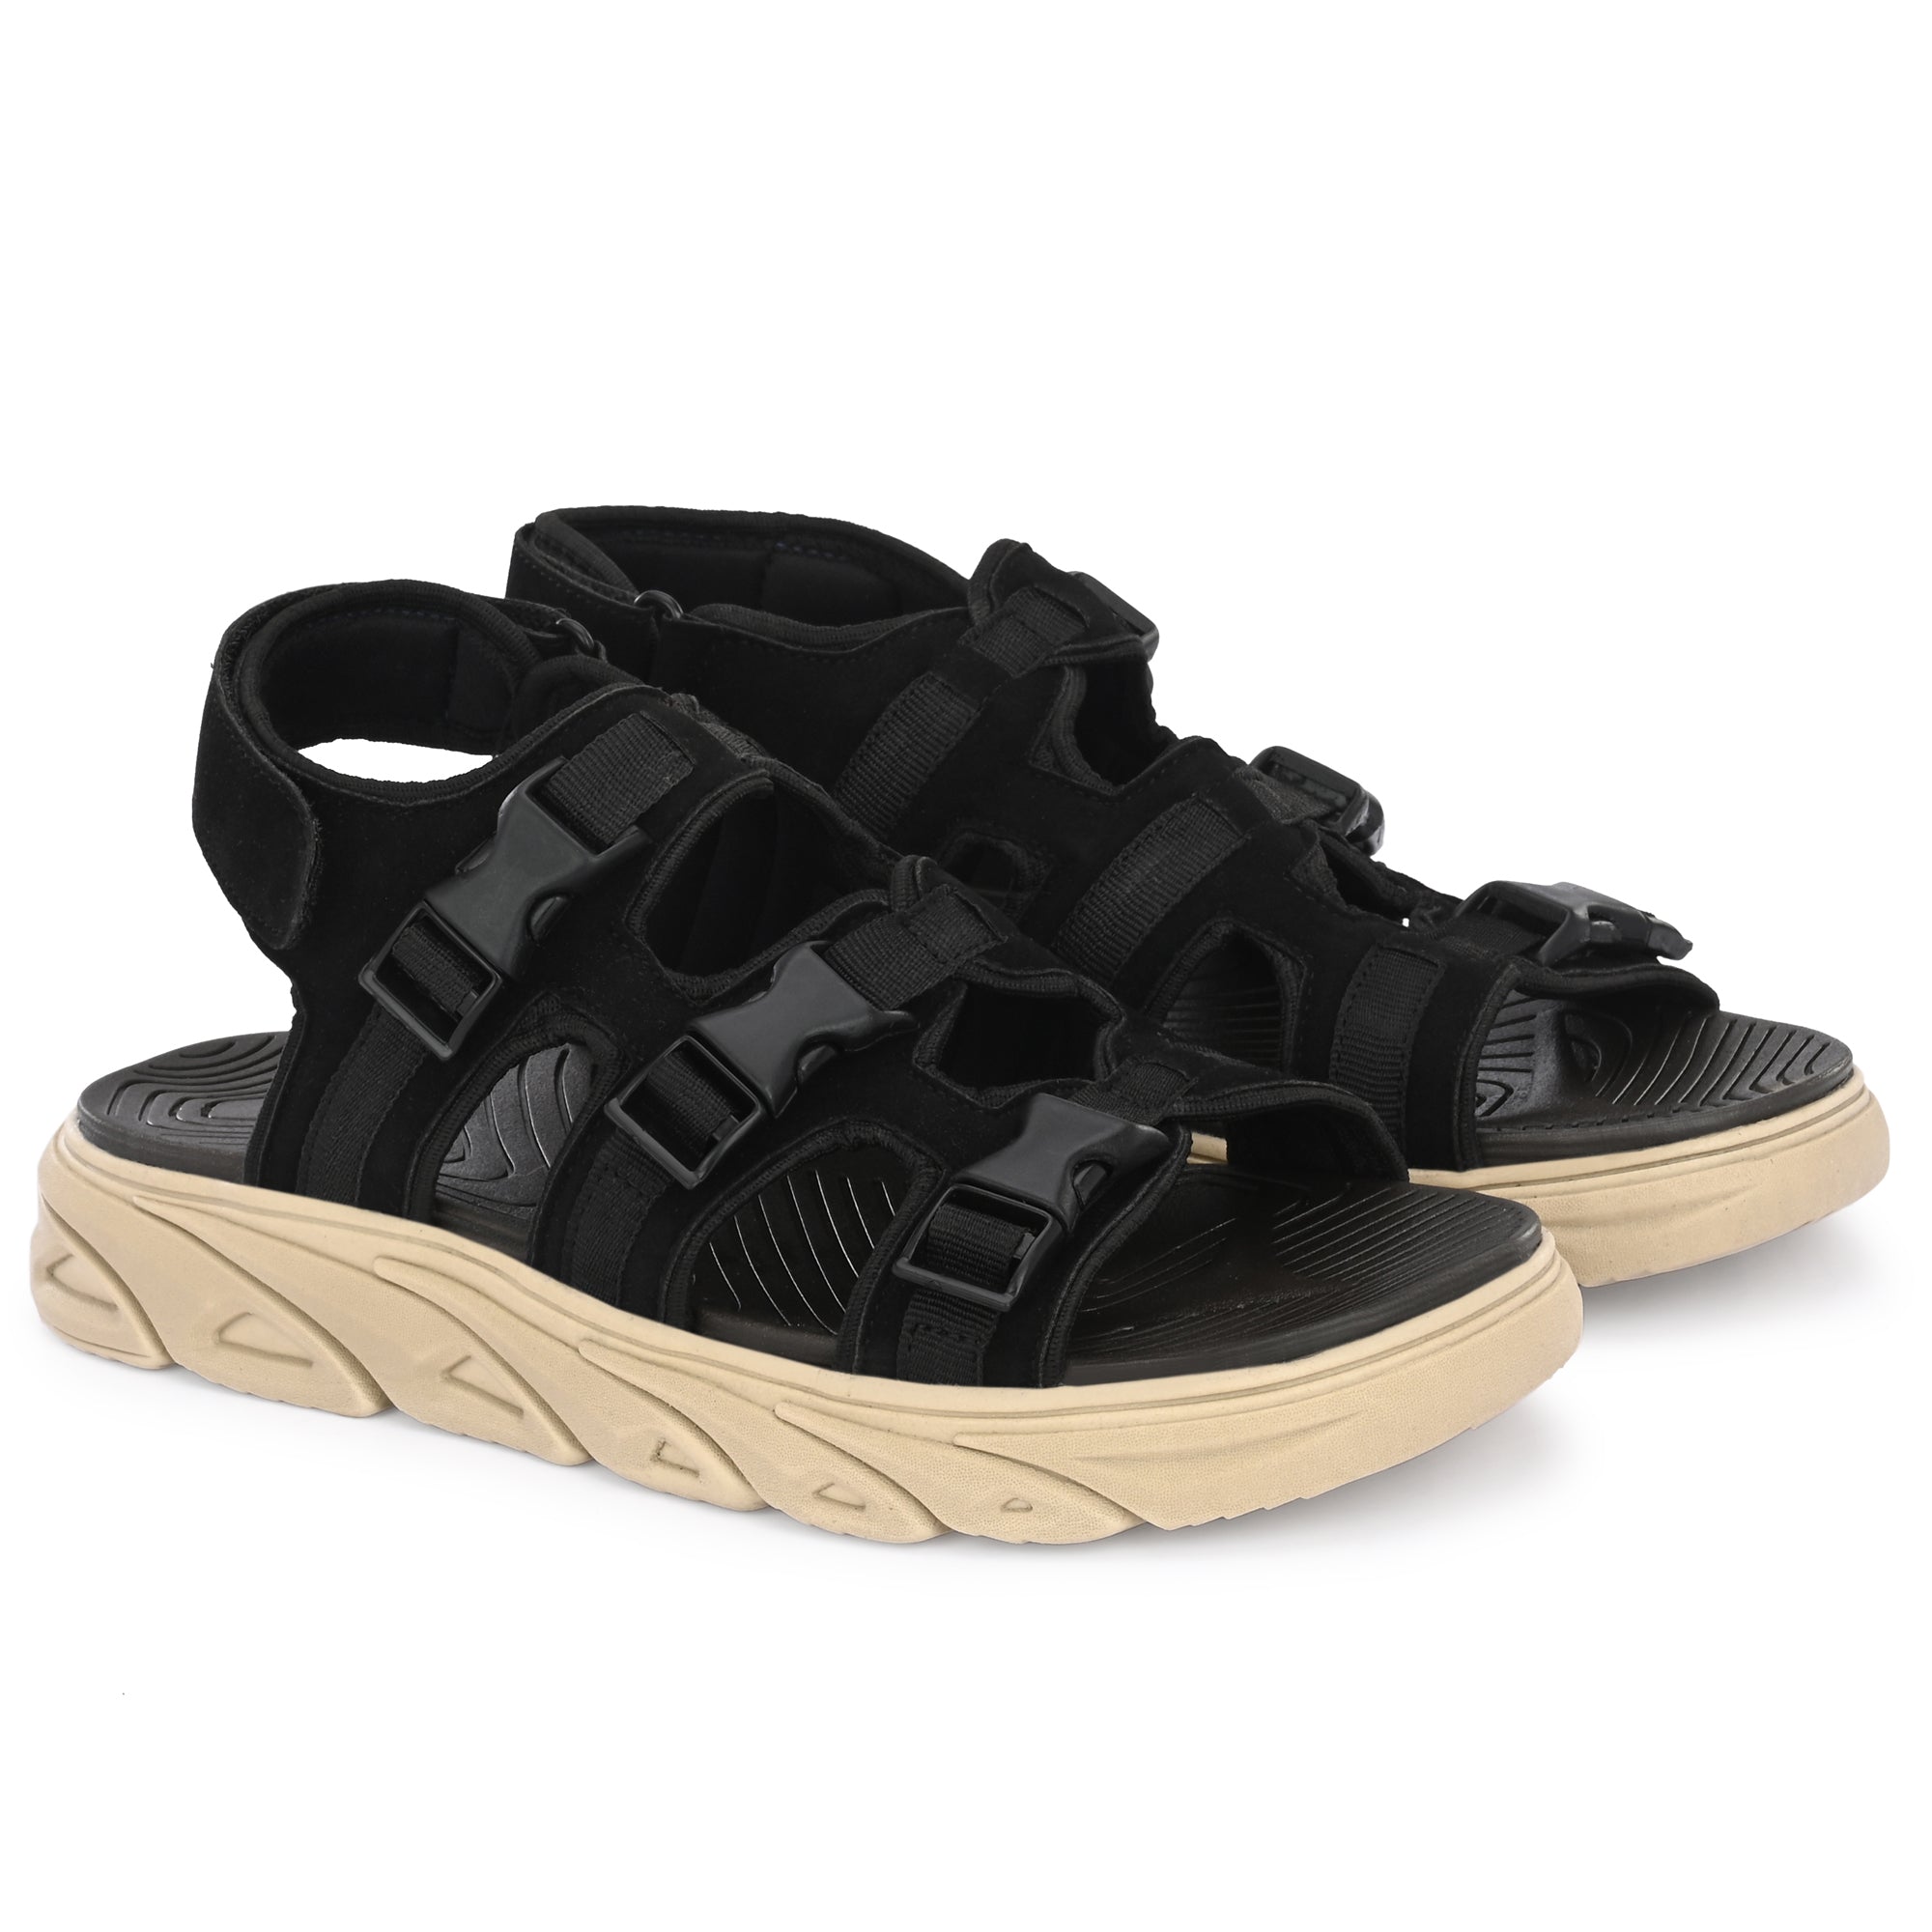 adidas Originals AdiSTRP Core Black Carbon Strap Men Casual Sandals IG0629  | eBay